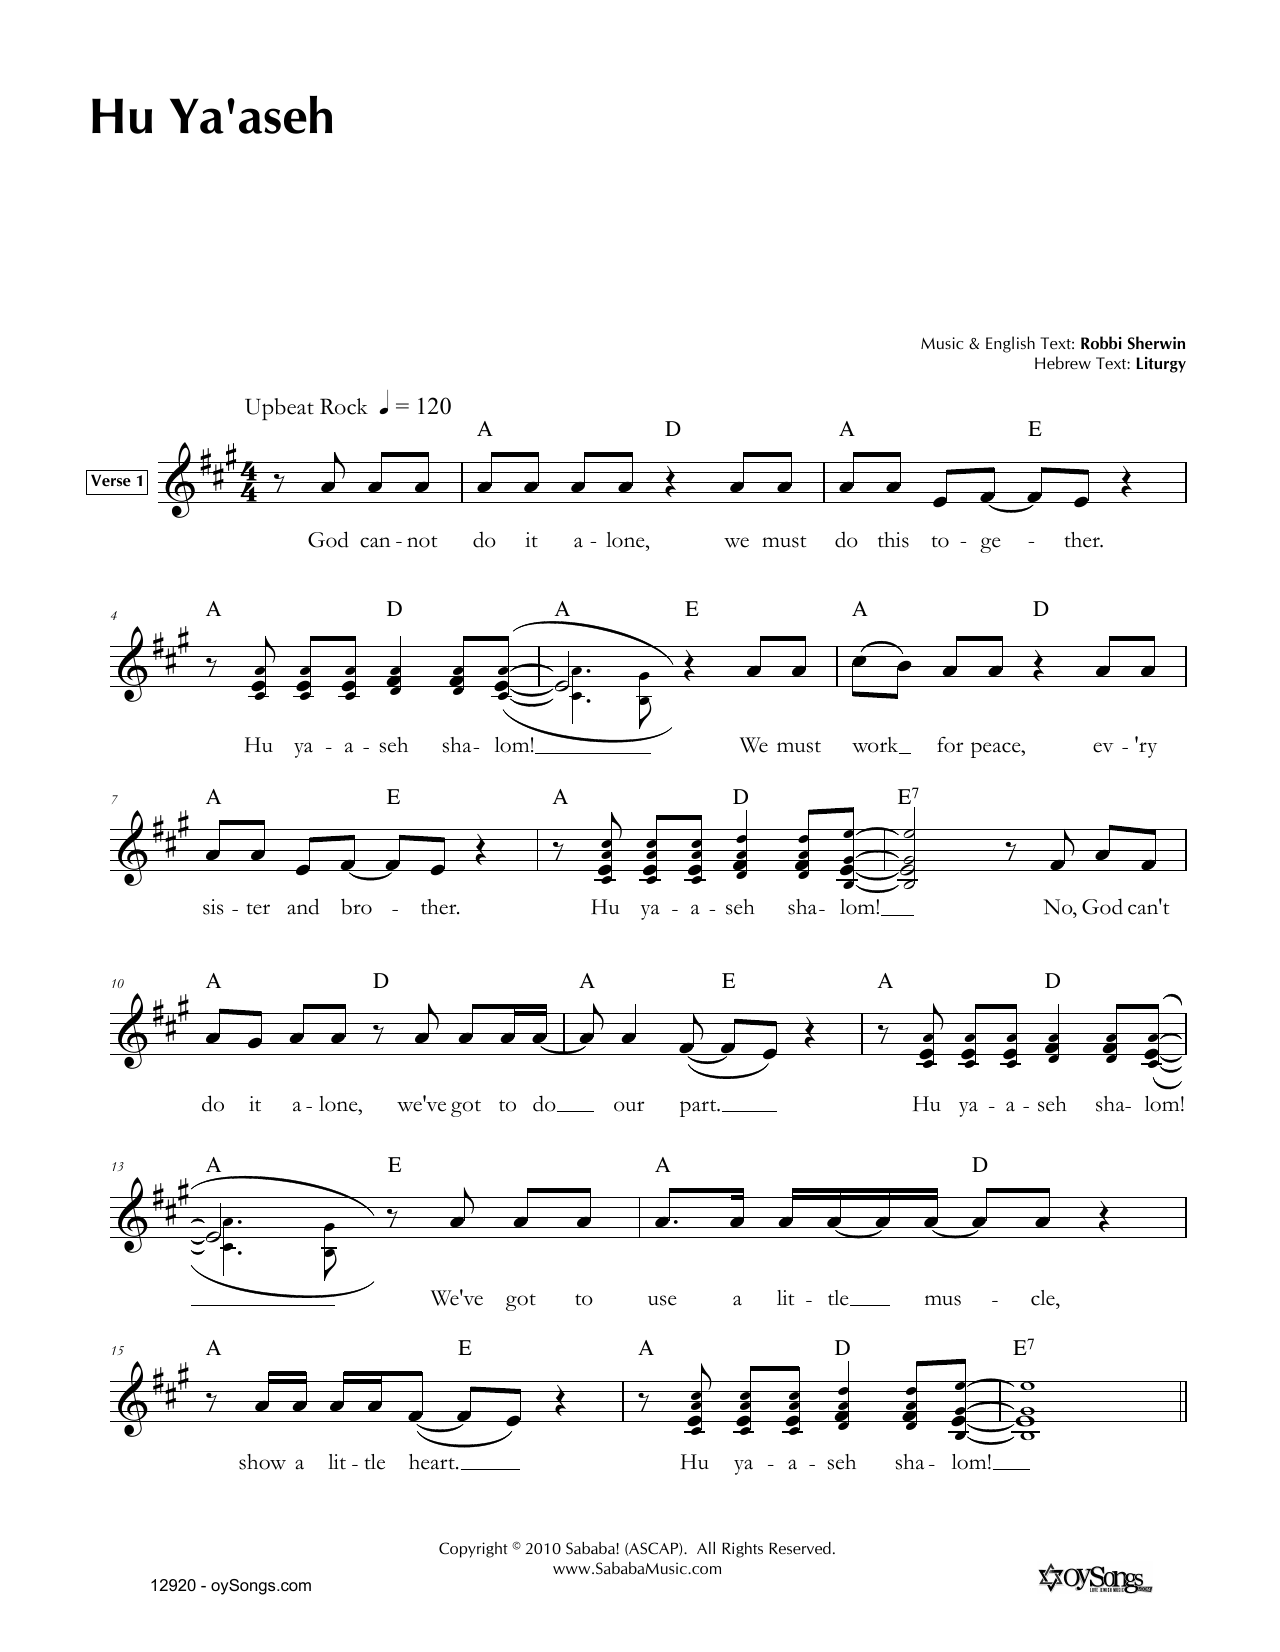 Robbi Sherwin Hu Ya'aseh Sheet Music Notes & Chords for Melody Line, Lyrics & Chords - Download or Print PDF